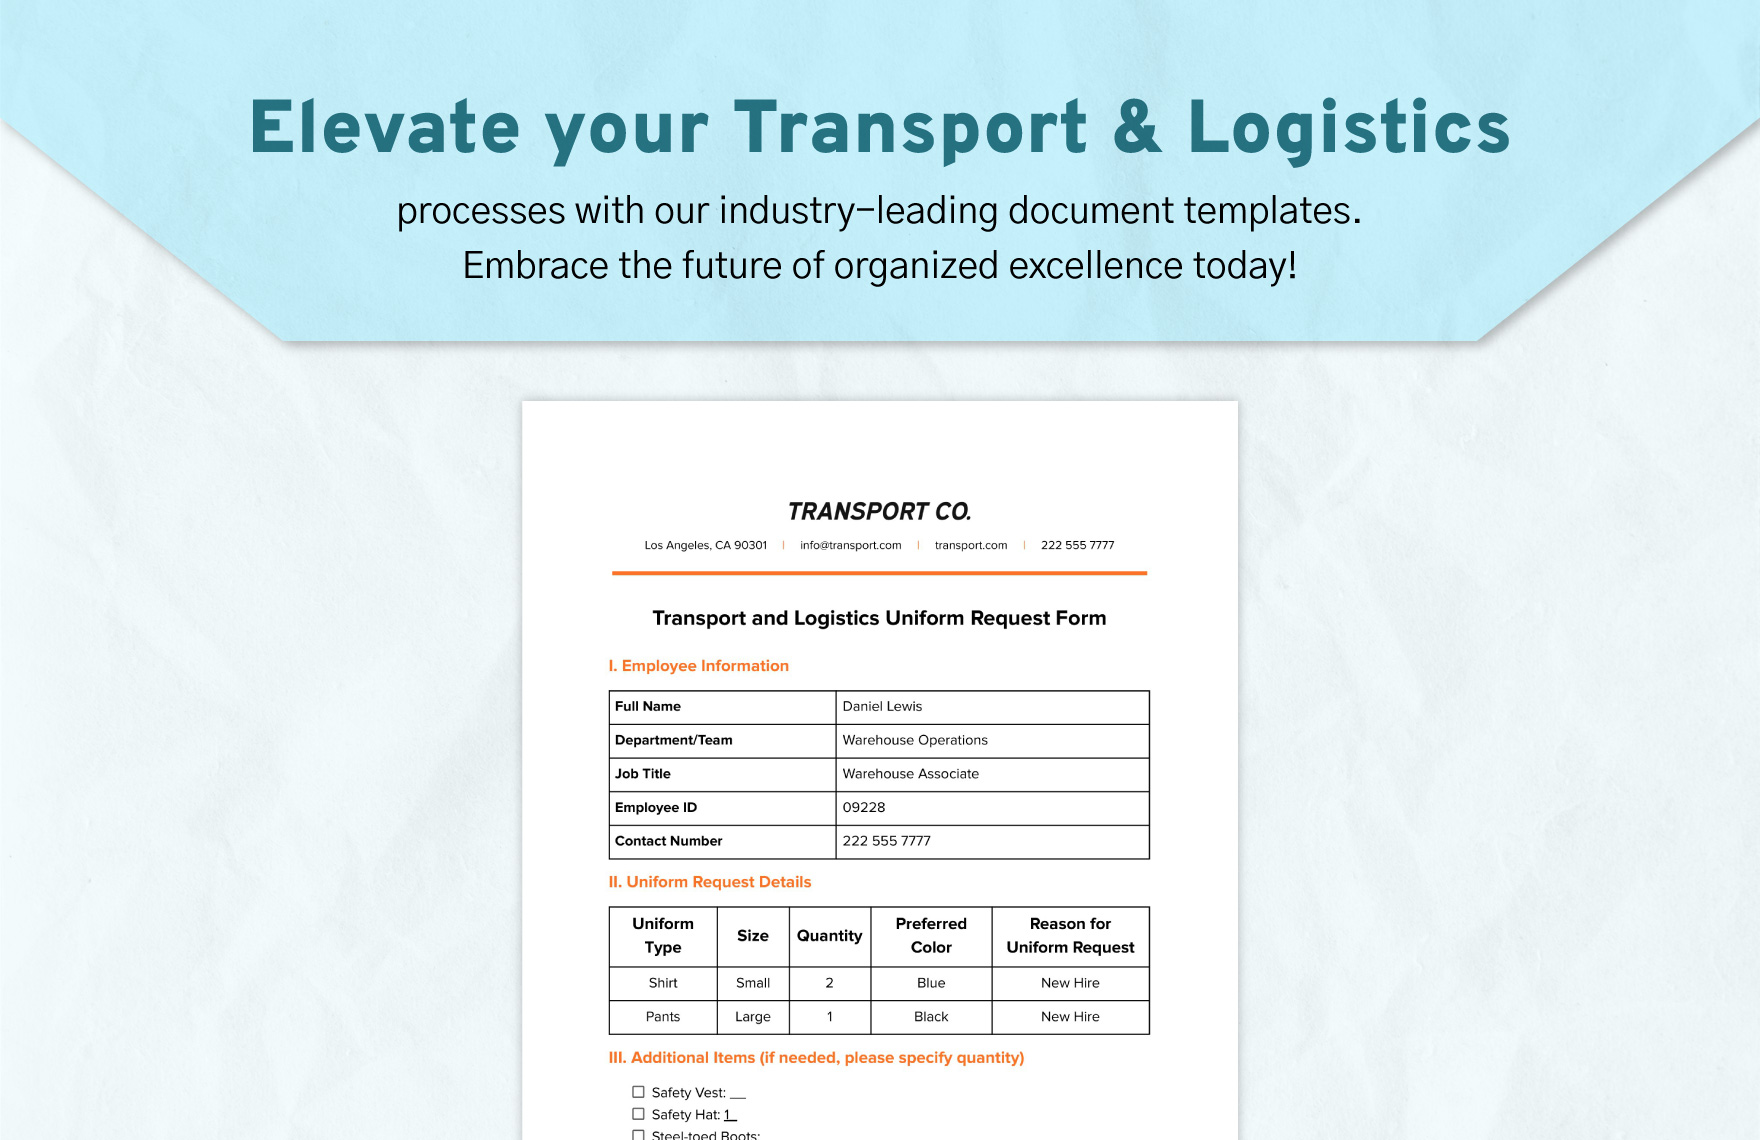 Transport and Logistics Uniform Request Form Template